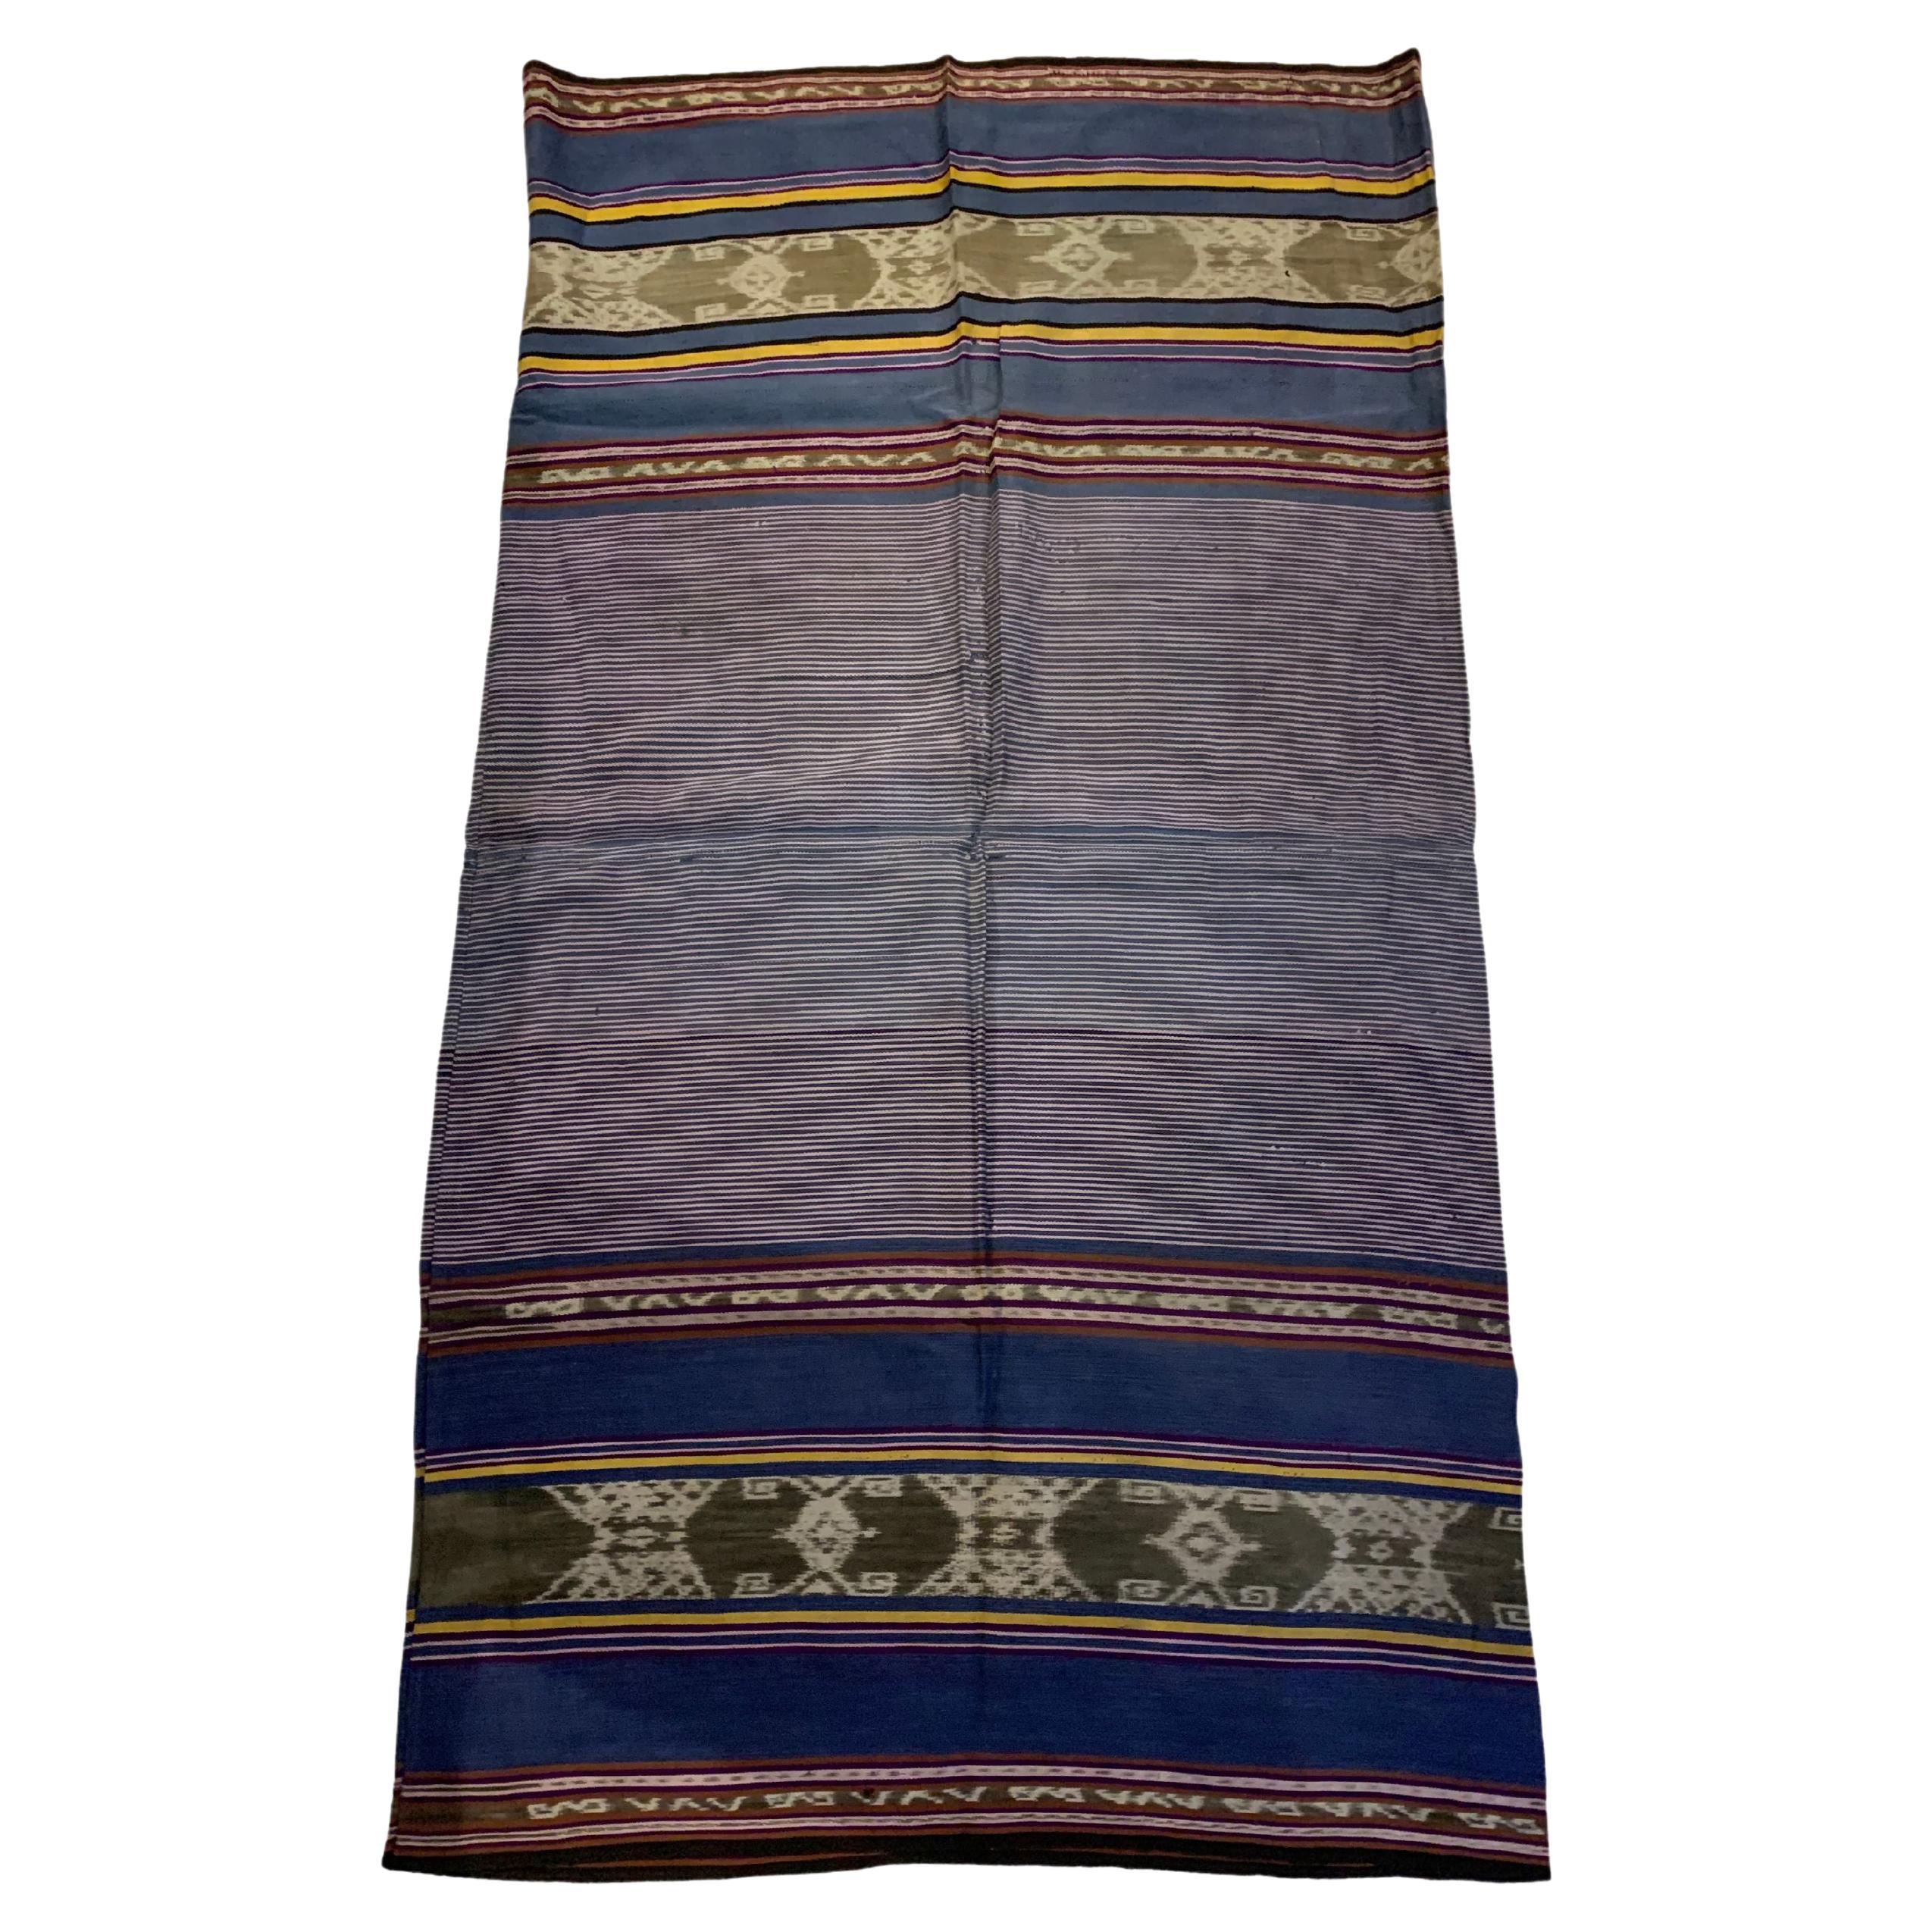 Ikat-Textil von Timor-Insel mit atemberaubendem naturfarbenem Farbstoff, Indonesien